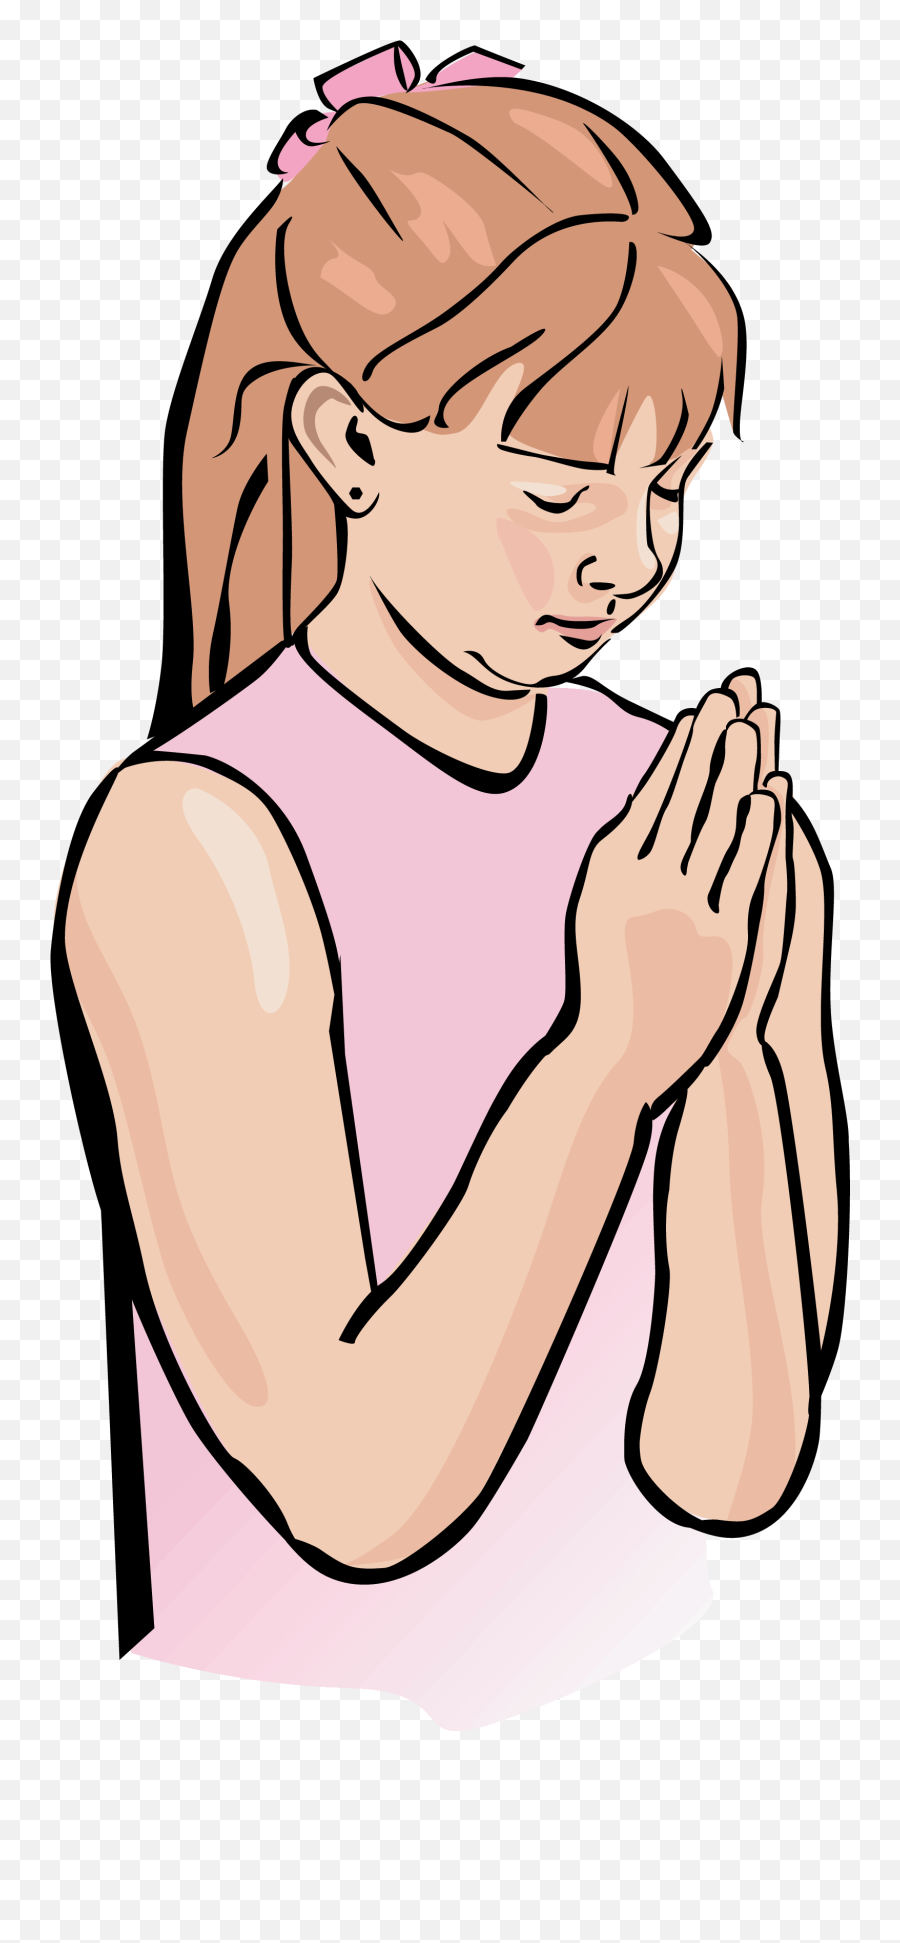 Child Prayer Clipart Free Clipart Images 2 - Clipartix Girl Praying Clipart Emoji,Praying Emoji